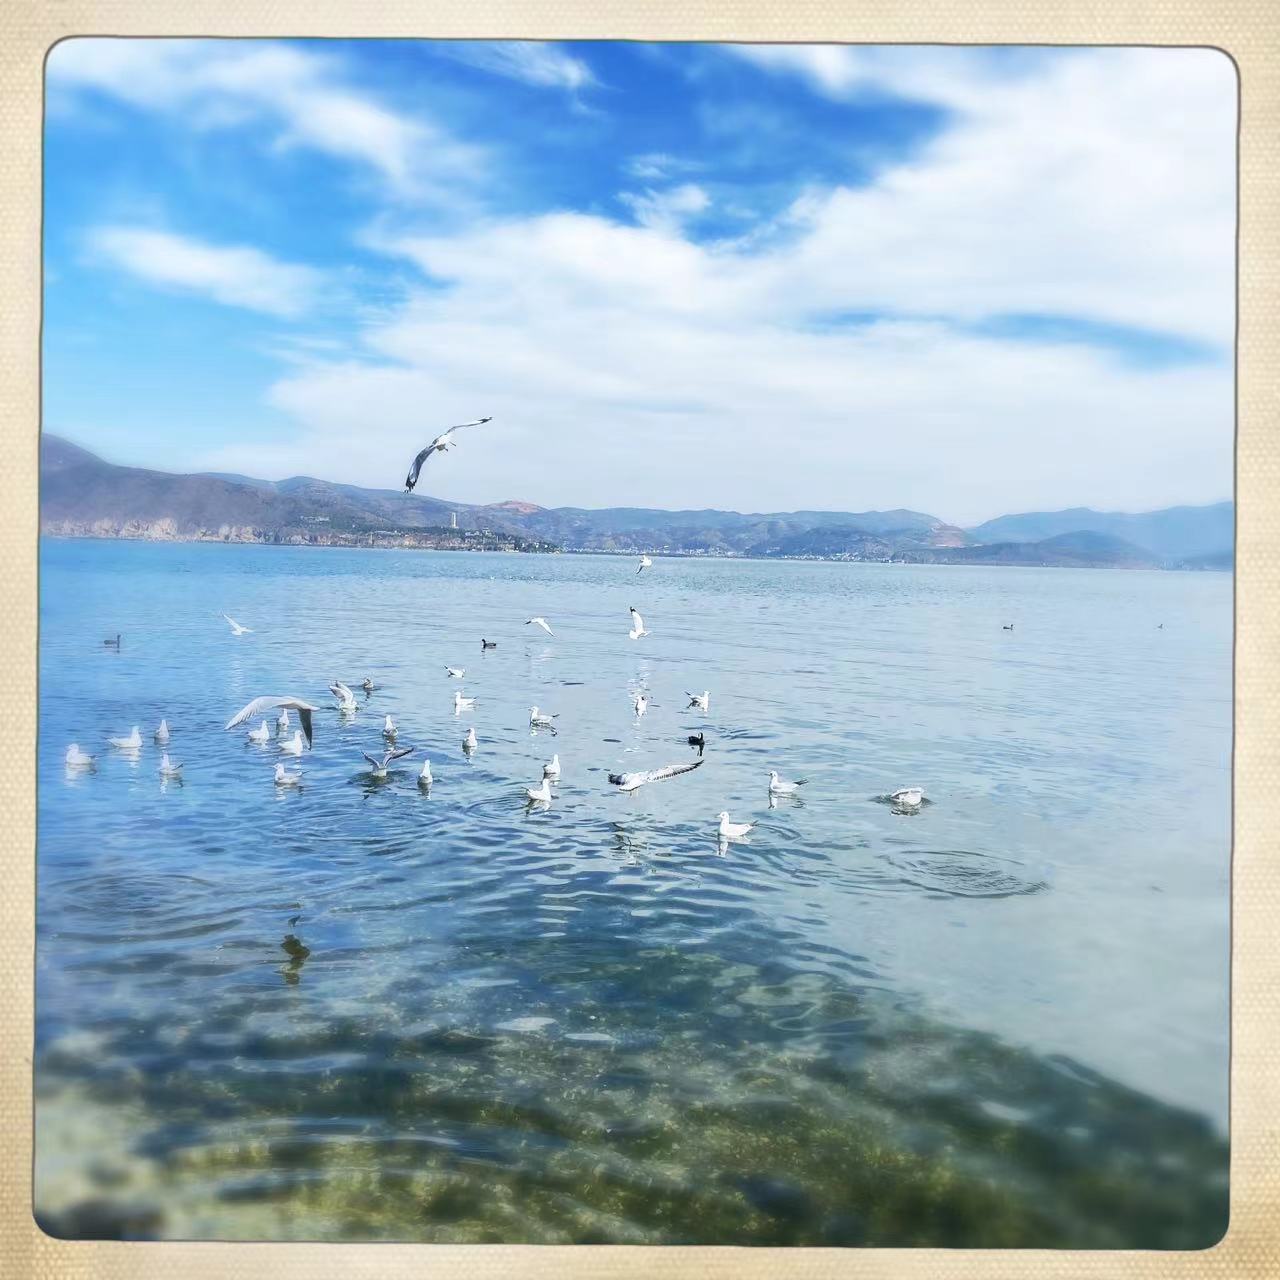 Siberian seagulls in Dali